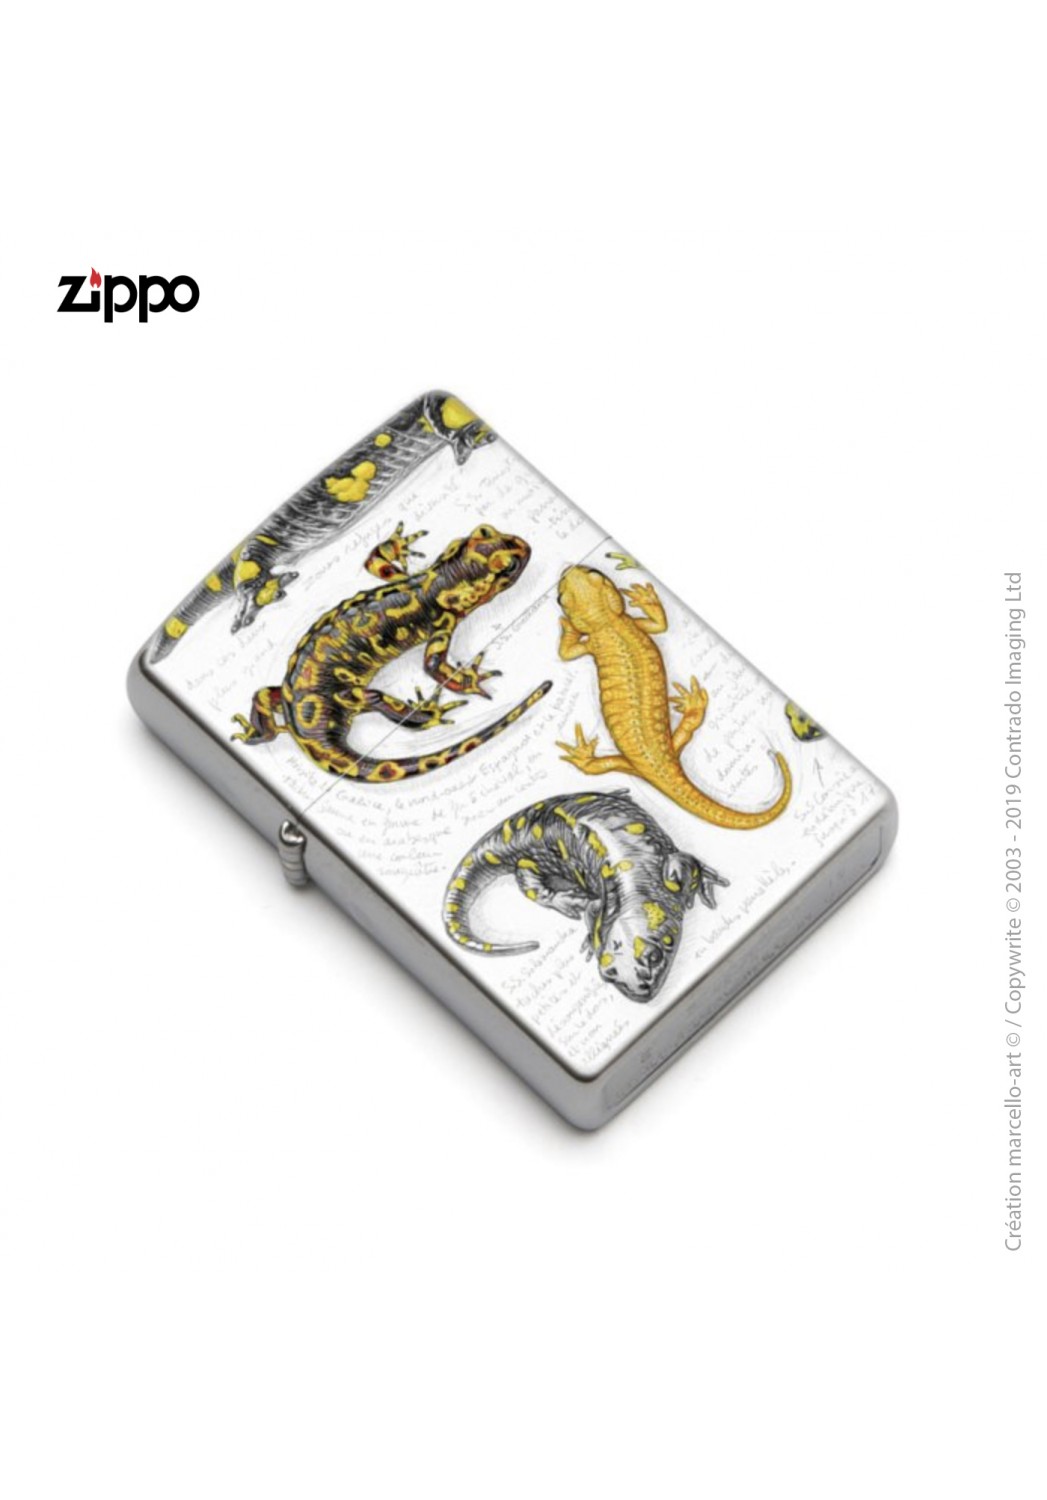 Marcello-art: Decoration accessoiries Zippo 383 B salamander